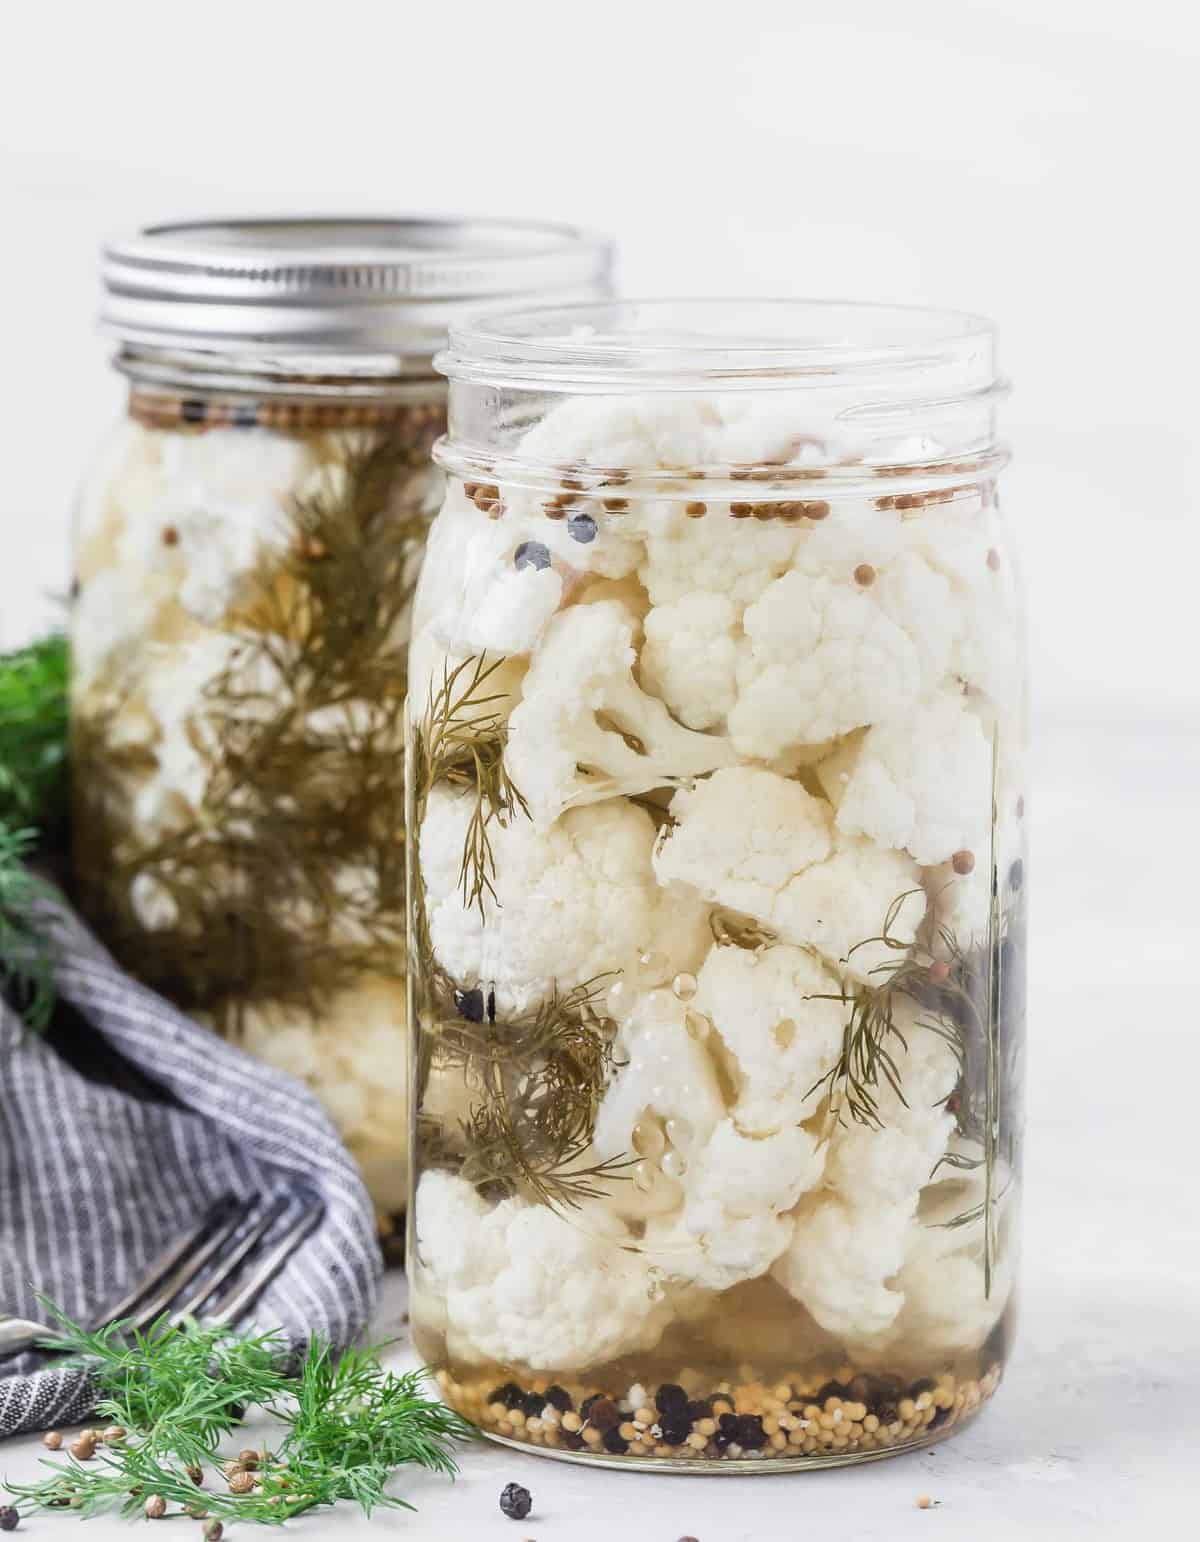 Two jars of cauliflower in pickling liquid.